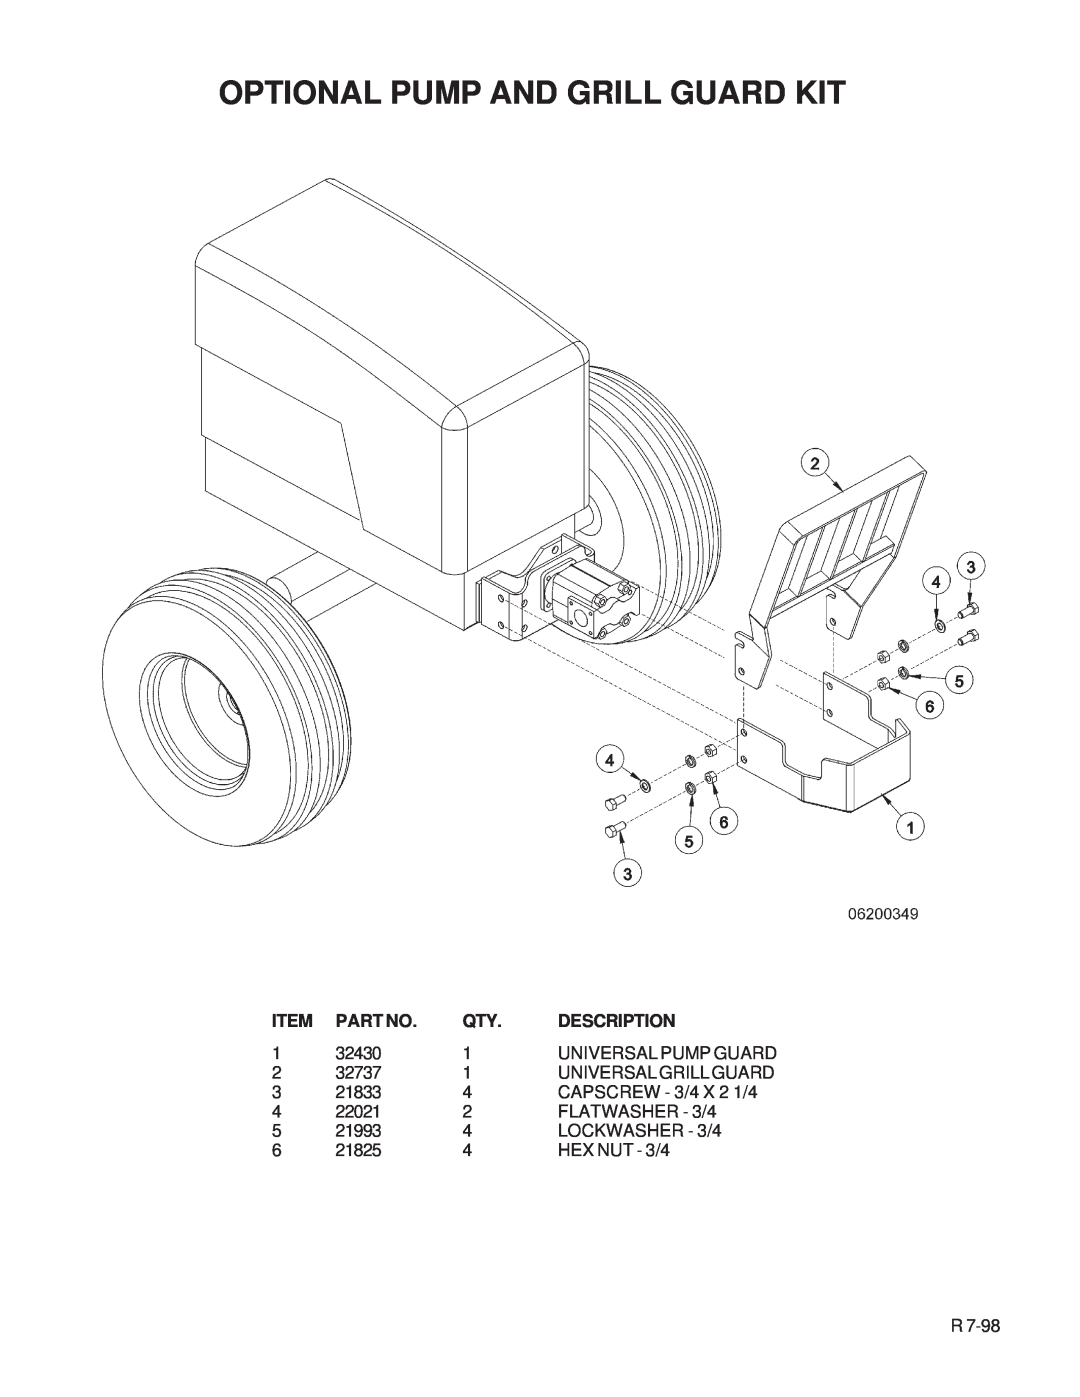 Tiger Products Co., Ltd TS 100A manual Optional Pump And Grill Guard Kit, Description 